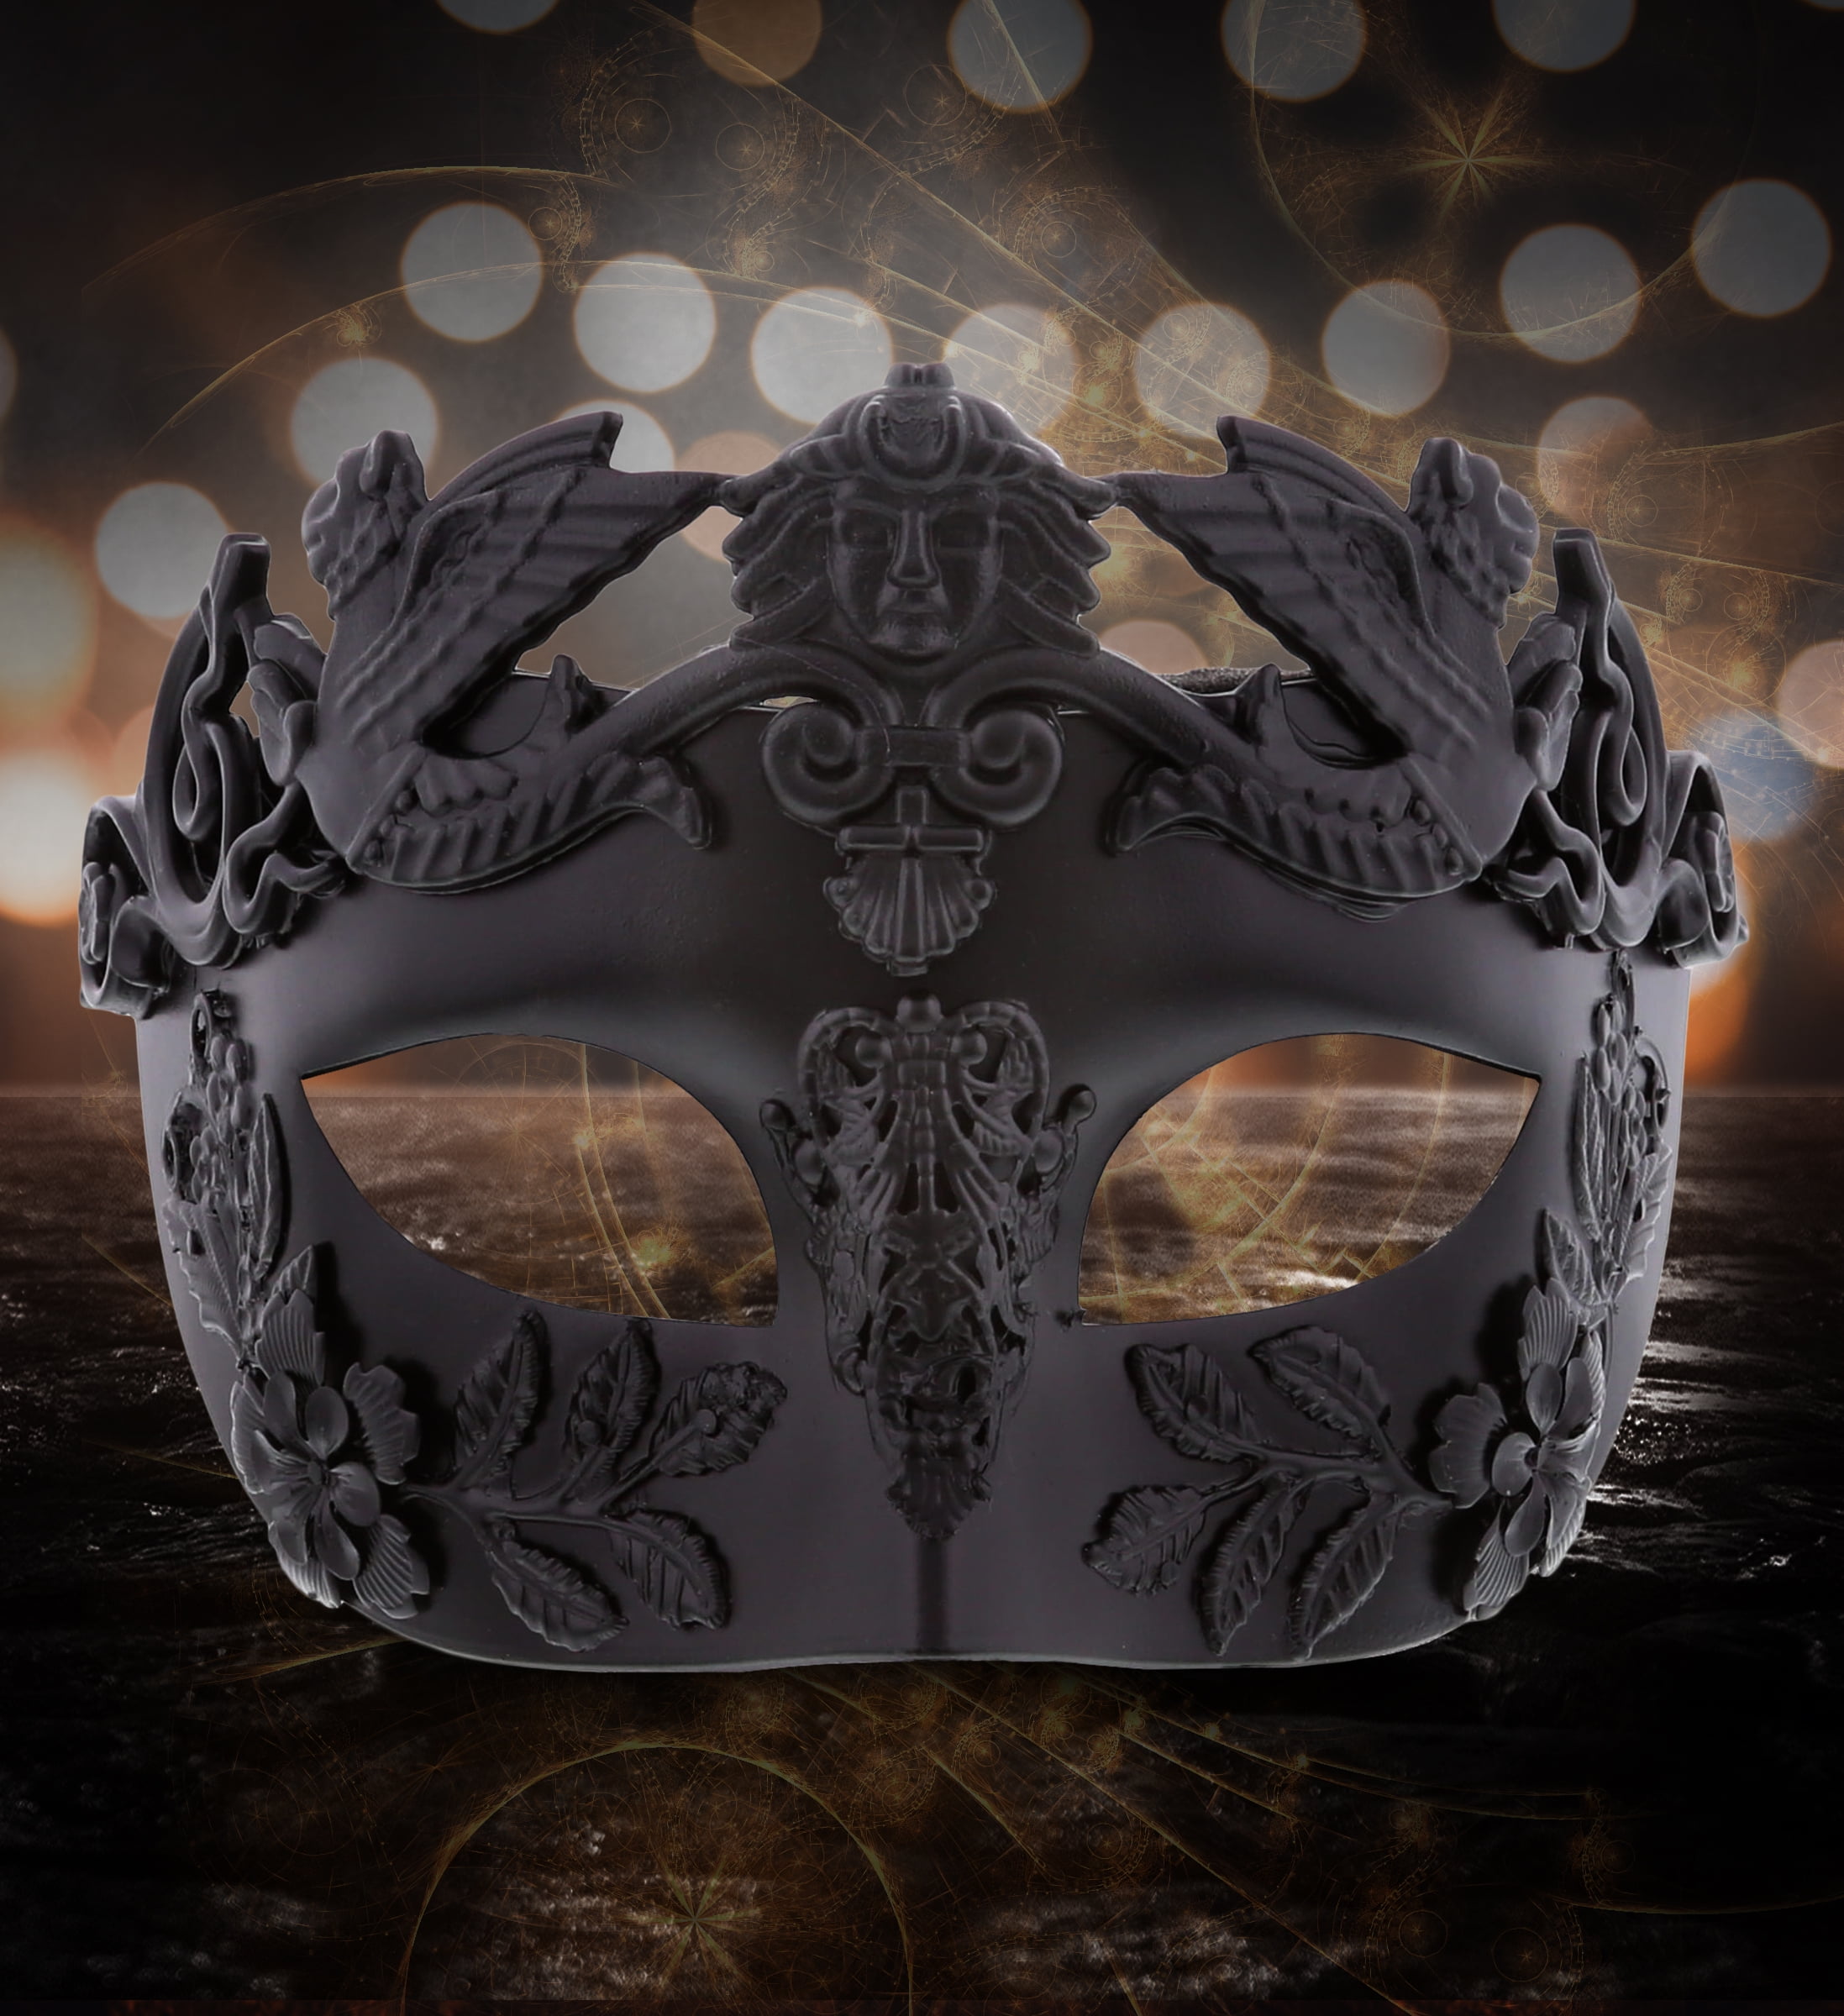 The Steampunk Venetian Mask display collar - Tahlia's Masks